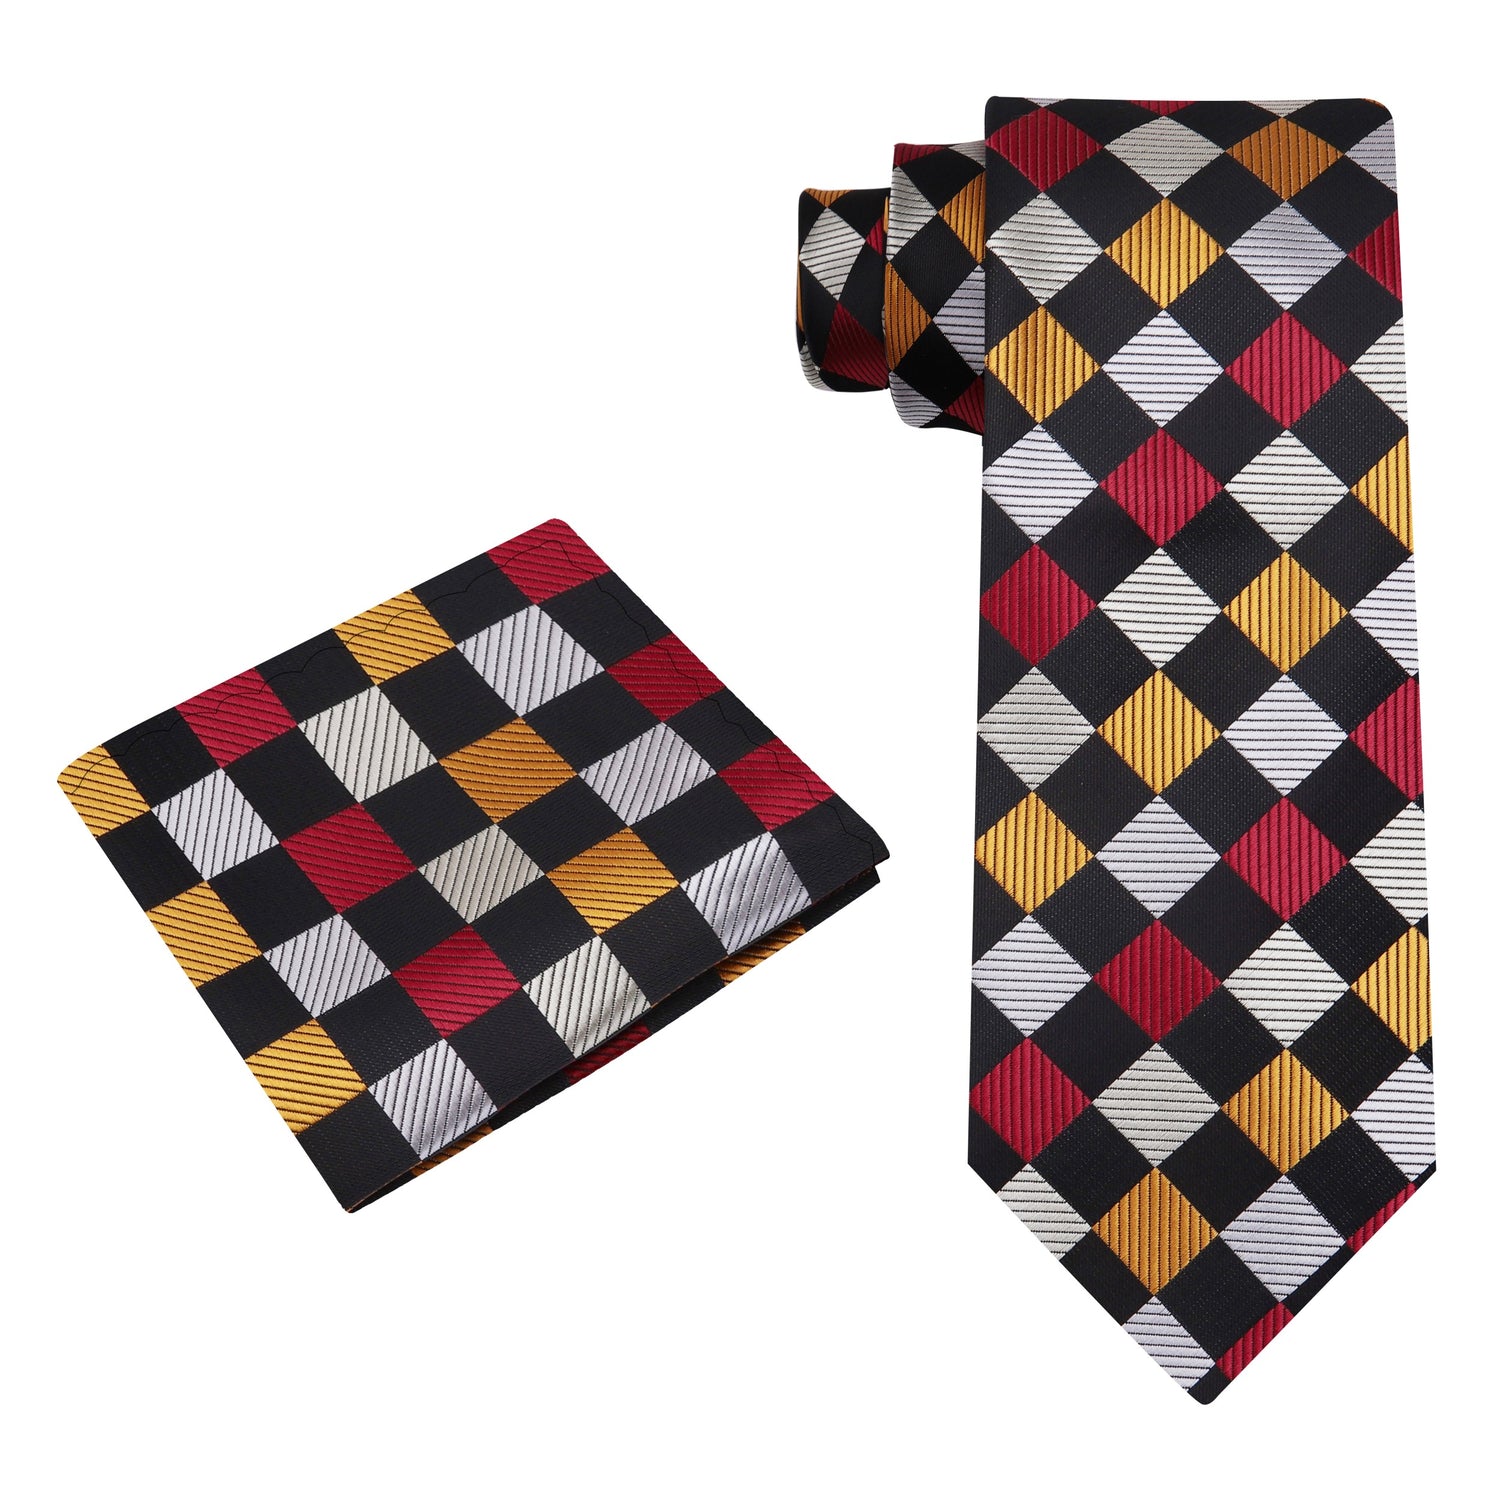 Alt View: A Red, Gold, Cream Geometric Diamond Pattern Silk Necktie, Matching Pocket Square